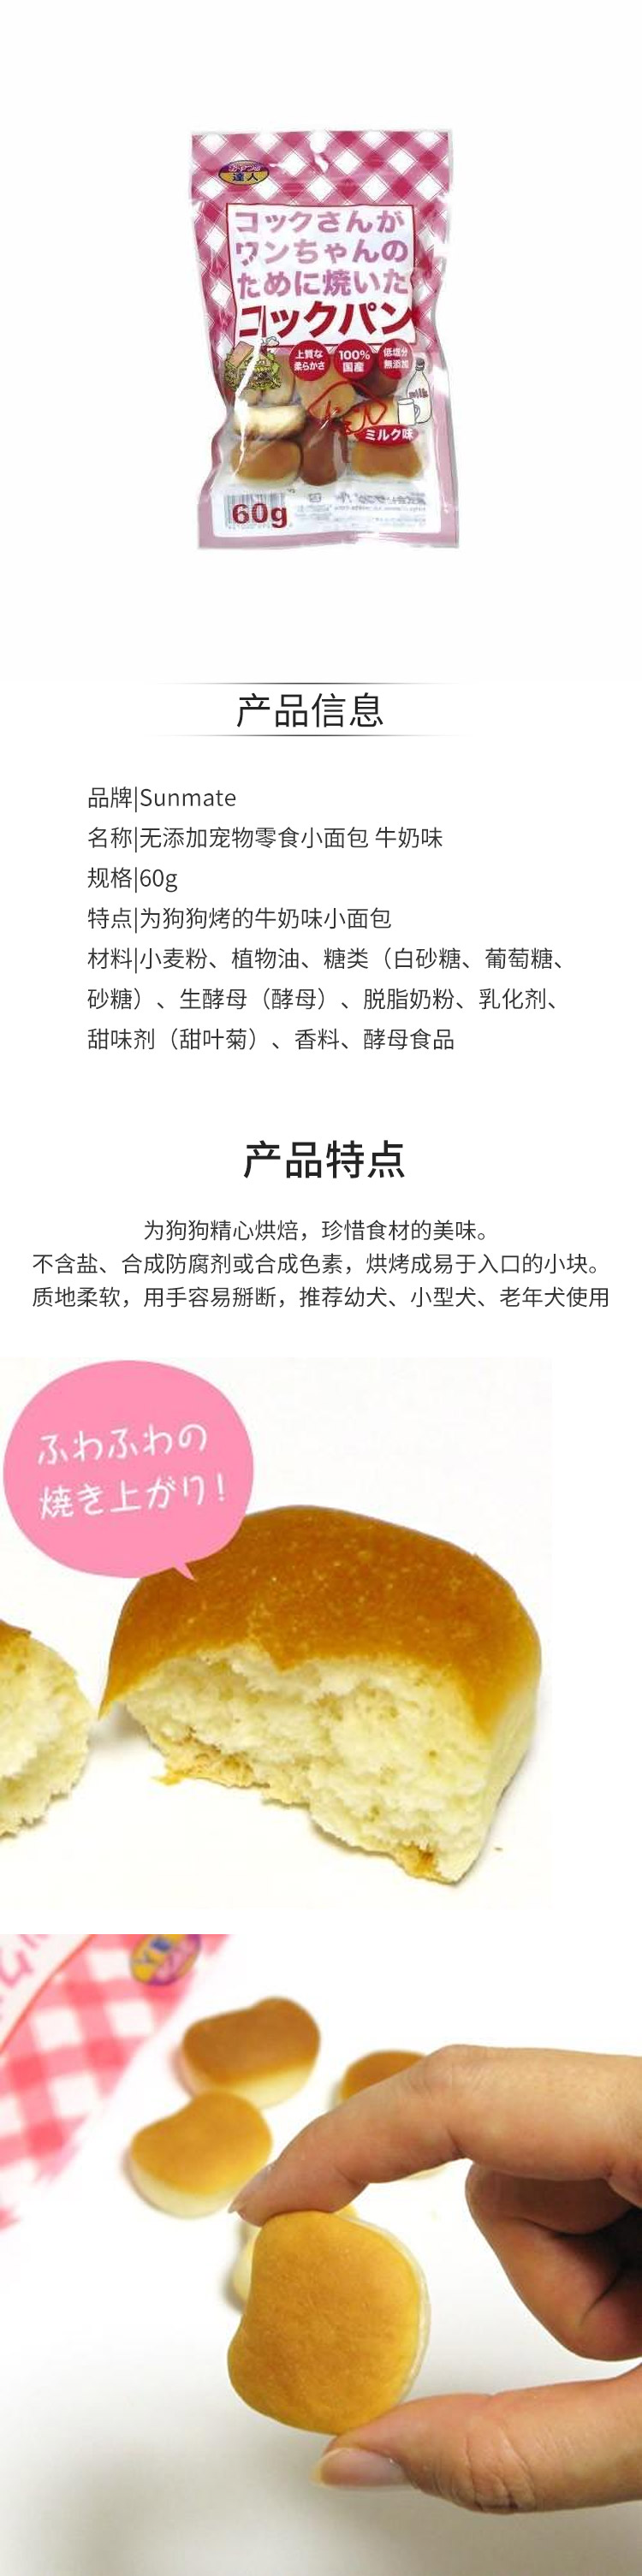 fanti【日版】wanwan狗粮-Choi-狗狗零食豆乳饼干40g.jpg